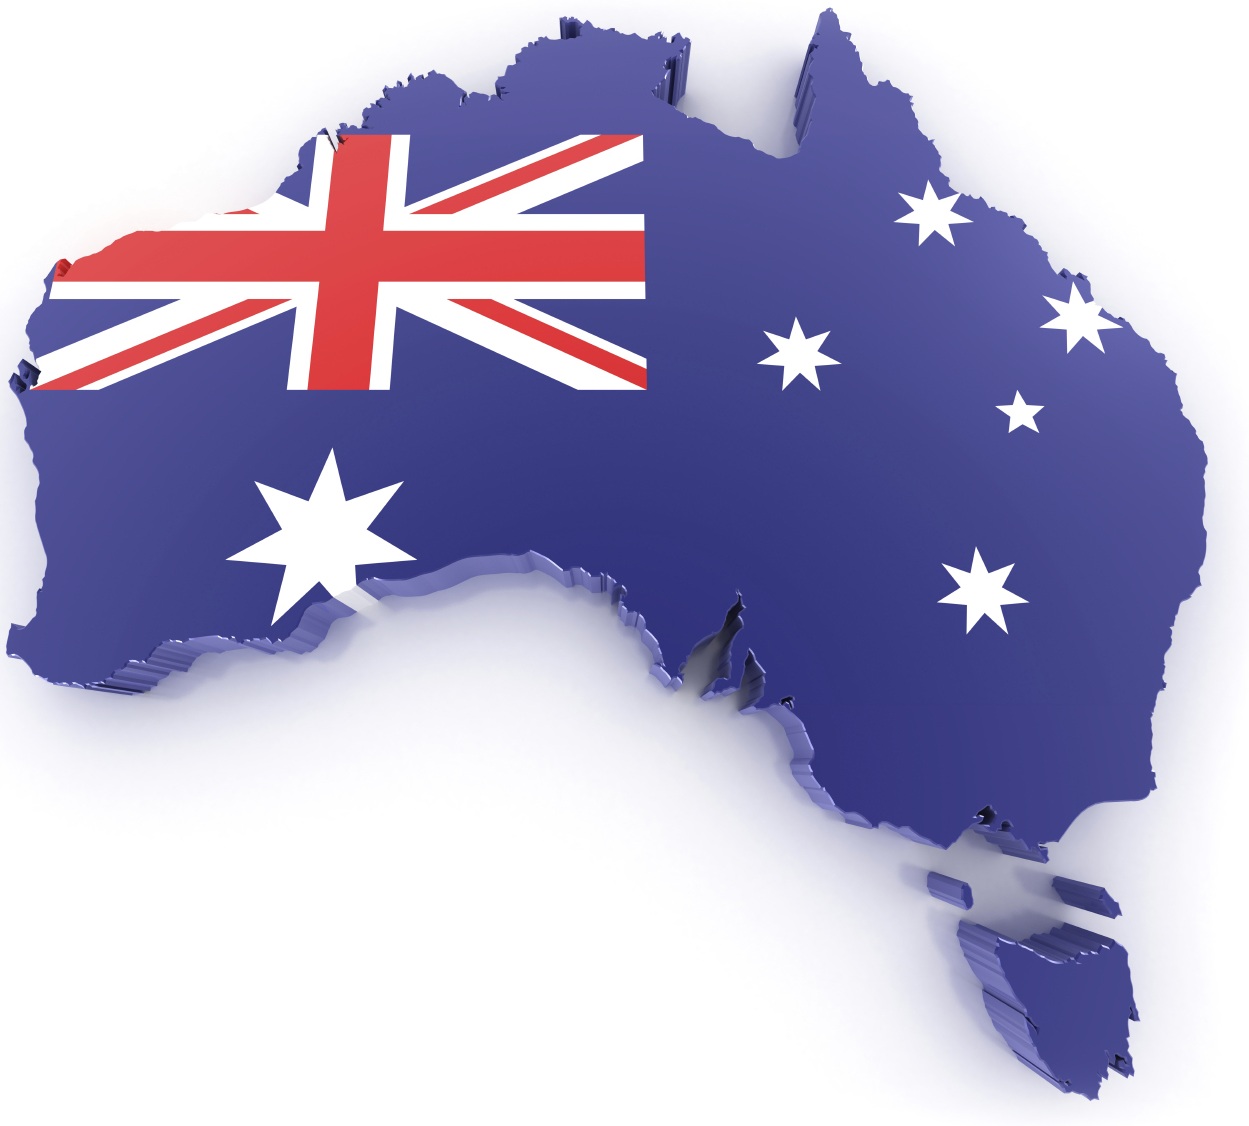 Tour du lịch Australia dịp Tết Âm lịch 2023: Melbourne - Canberra - Sydney 6N5Đ